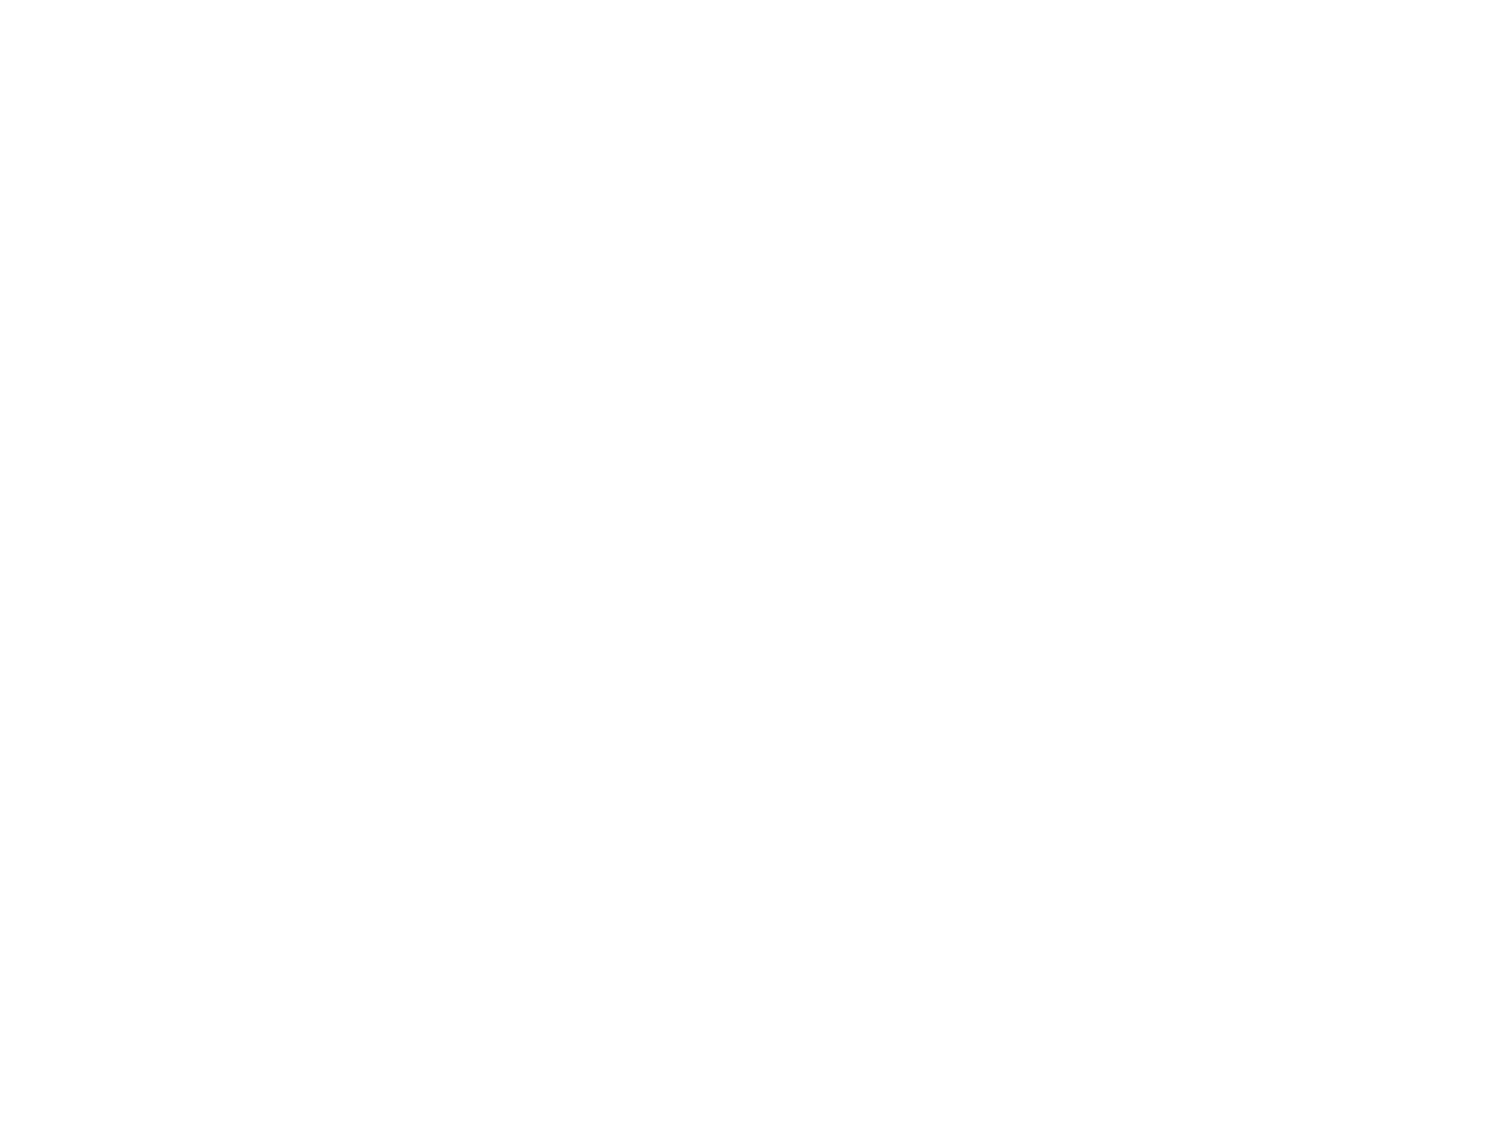 Troy Music Academy